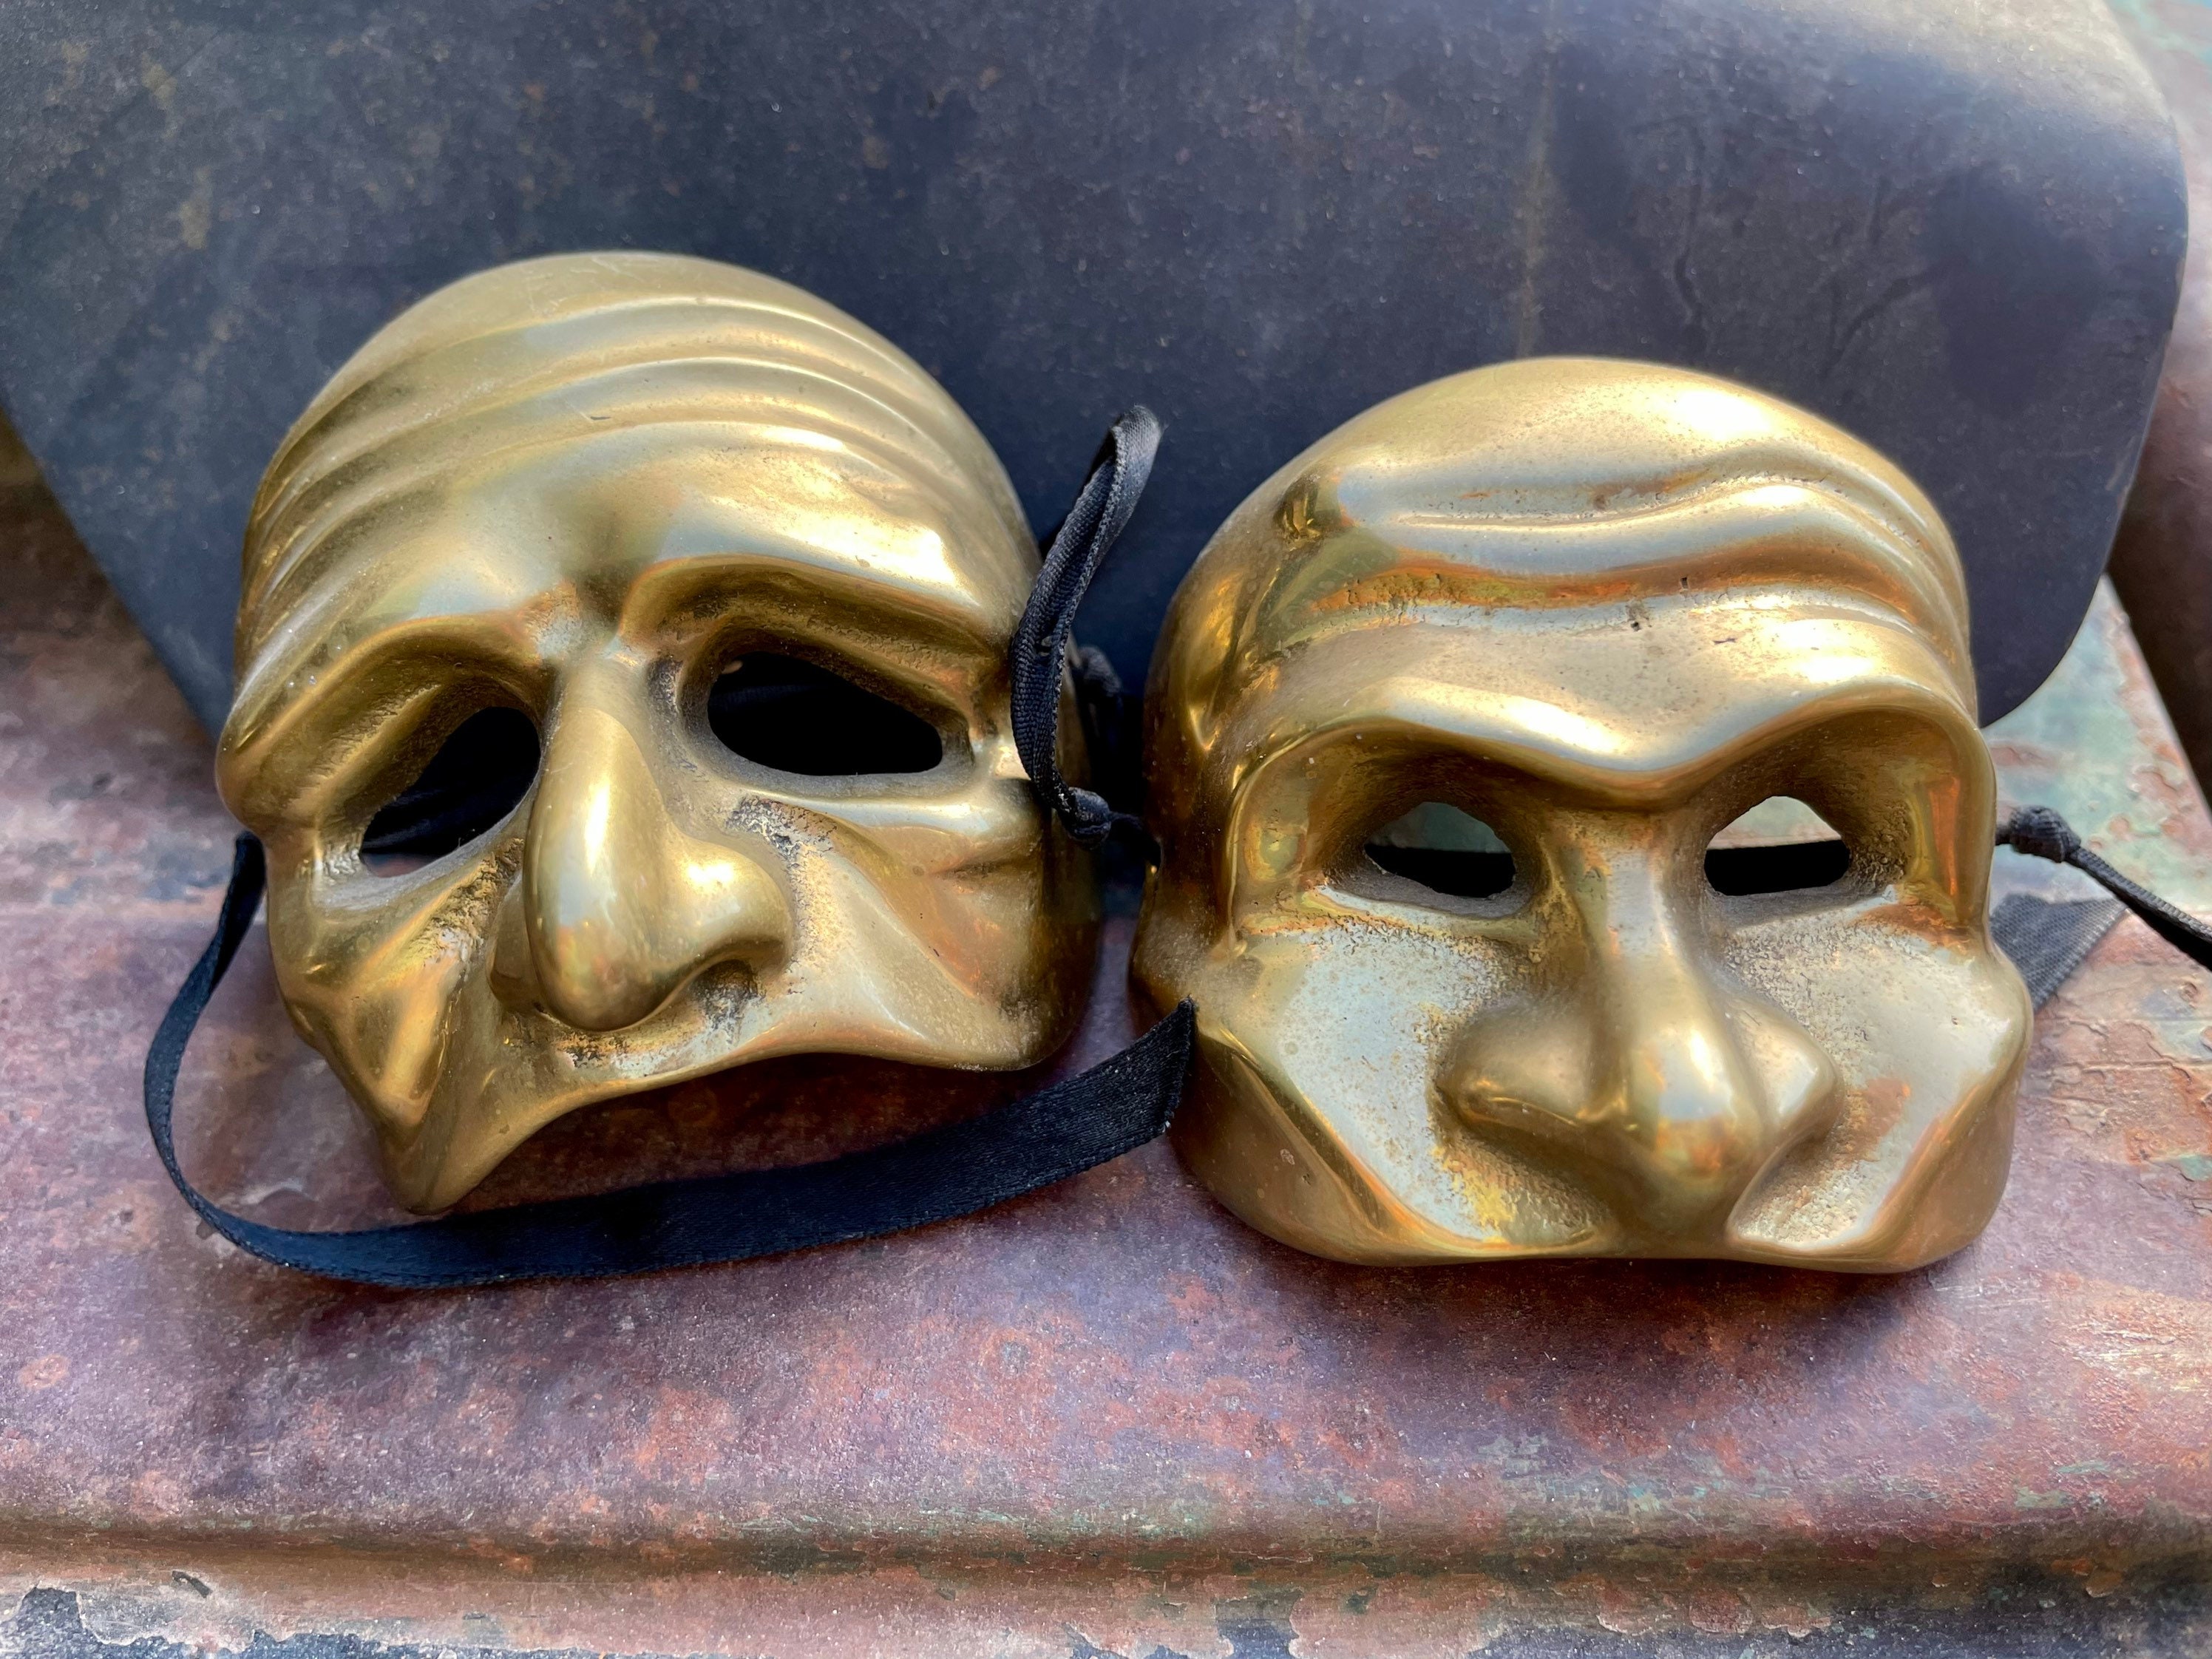 ANTIQUE ROMAN MOSAICS ,GREEK COMEDY THEATER MASKS  Mask for Sale by  BulganLumini